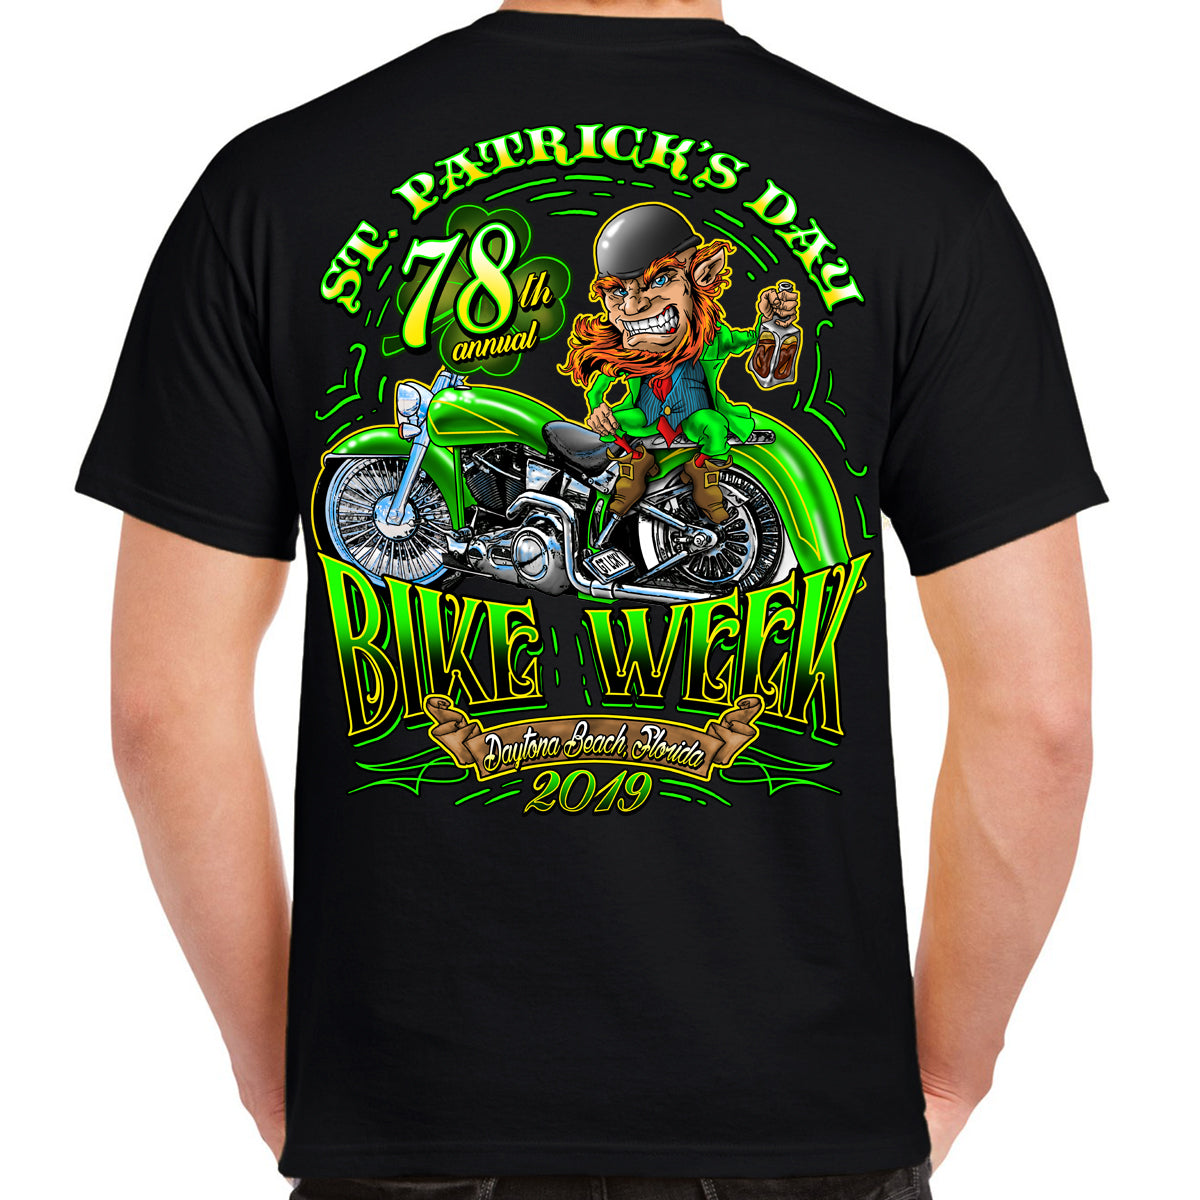 2019 Bike Week Daytona Beach St. Patty's T-Shirt | eBay